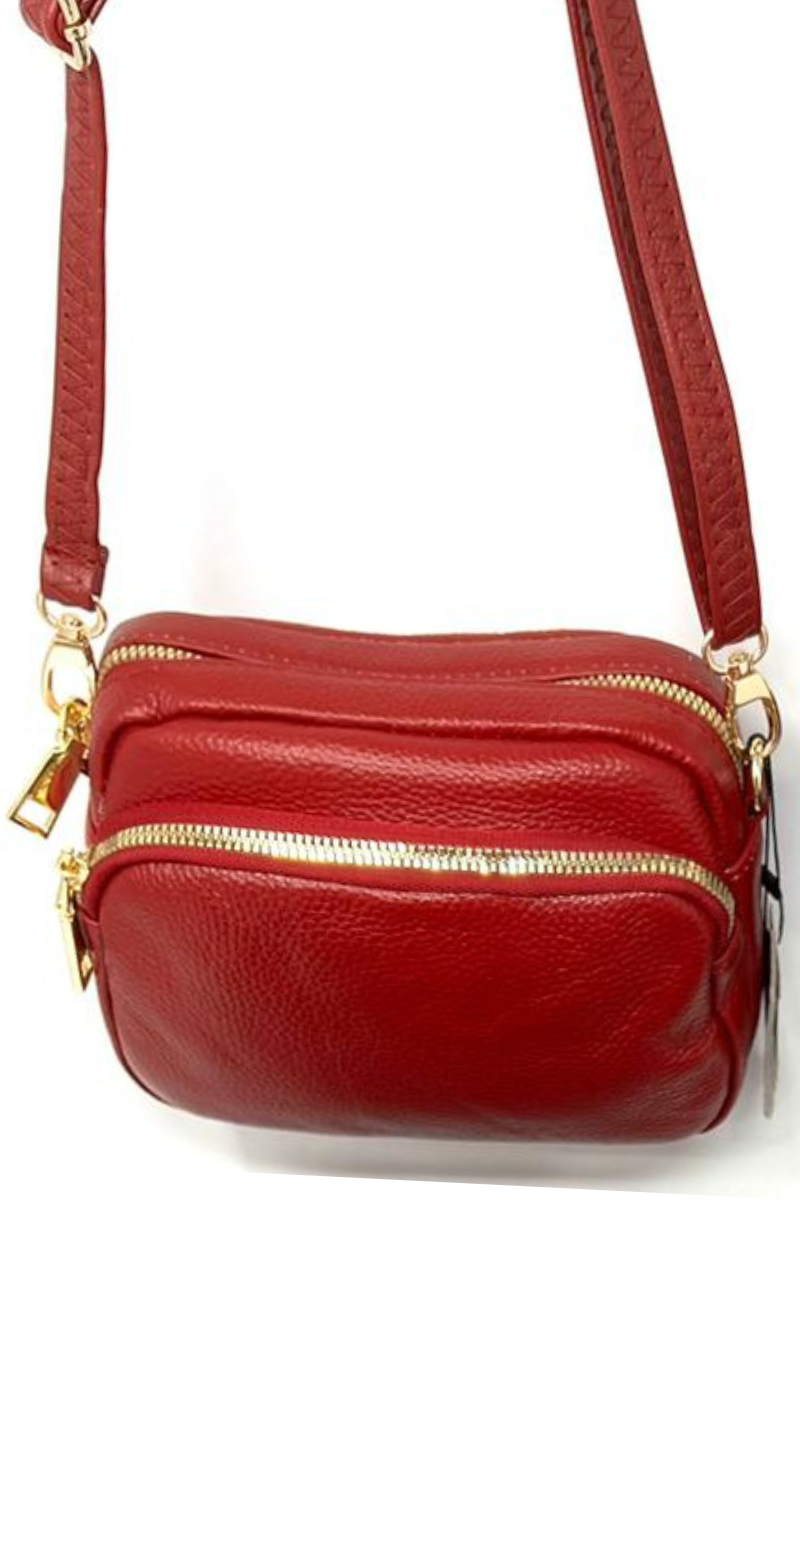 Læder taske rød Likelondon LikeLondon.com